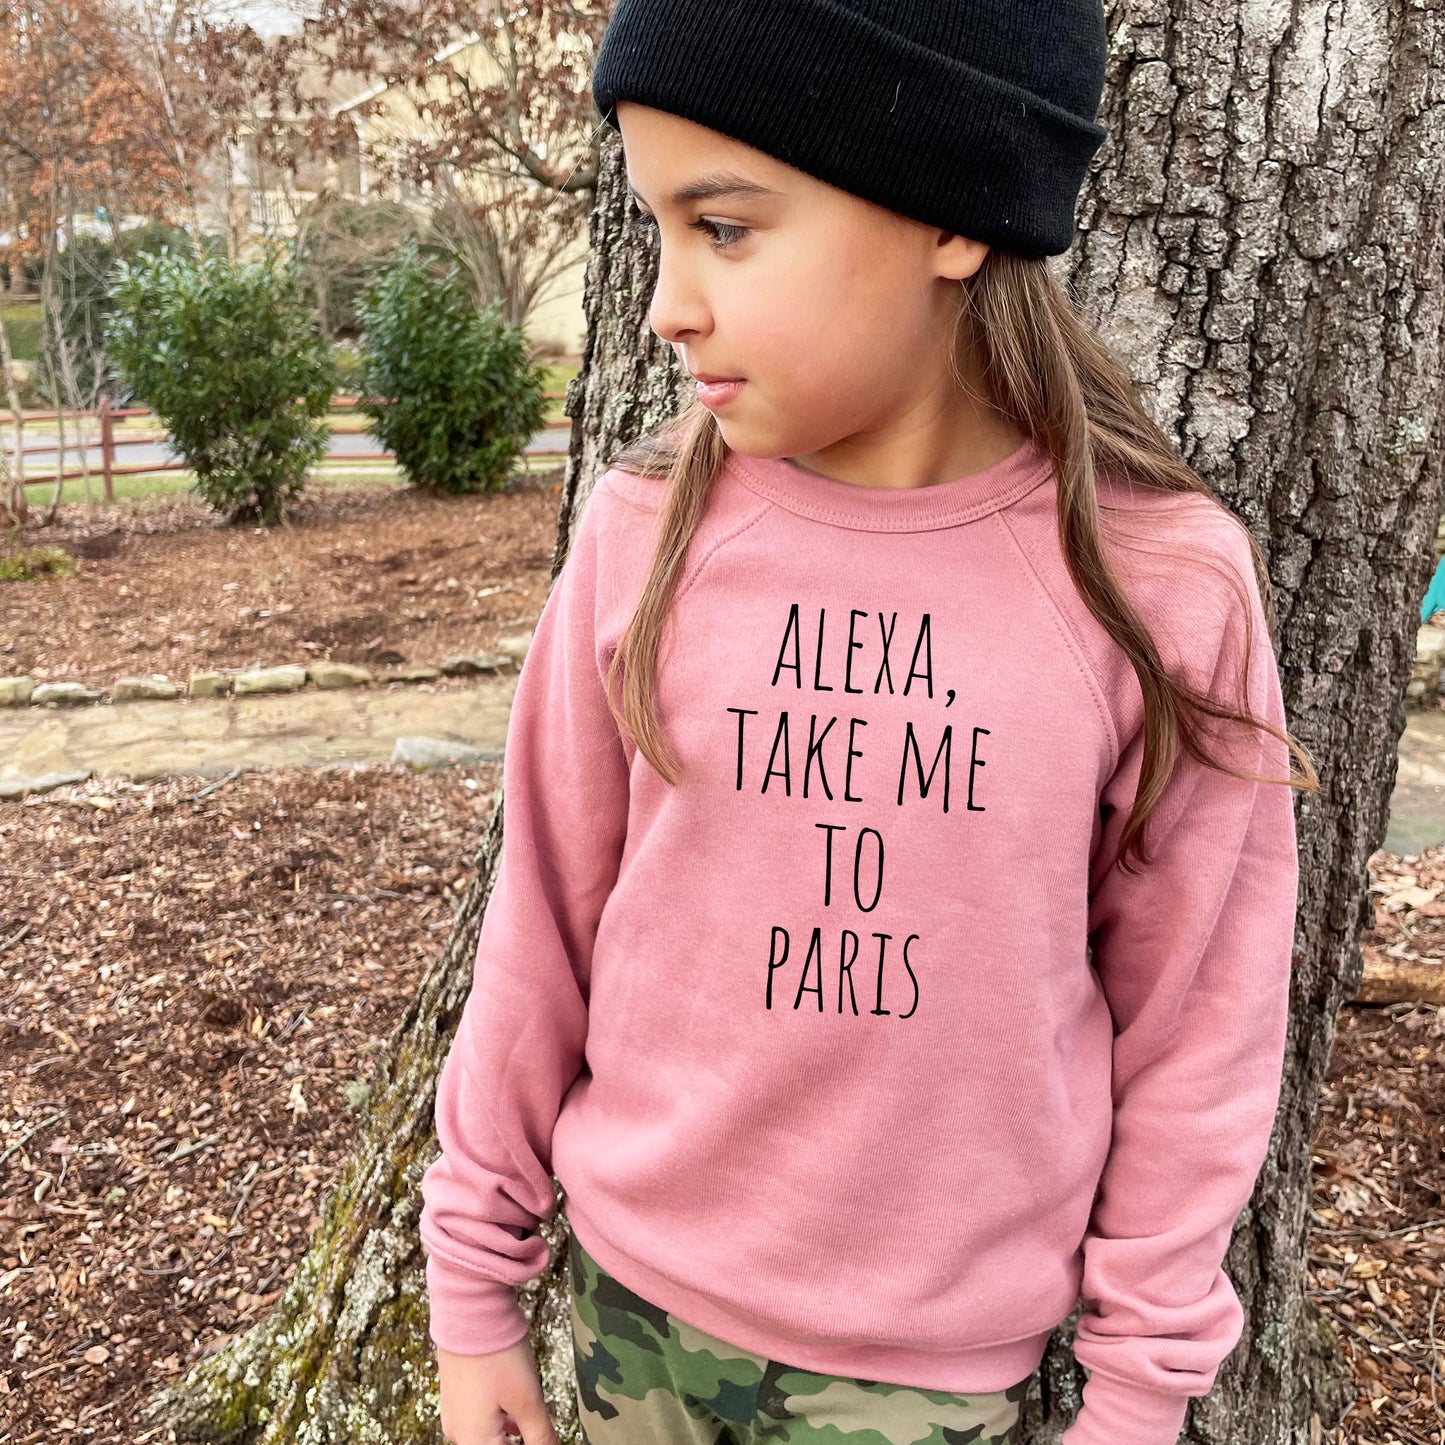 Alexa, Take Me To Paris - Kid's Sweatshirt - Athletic Heather or Mauve